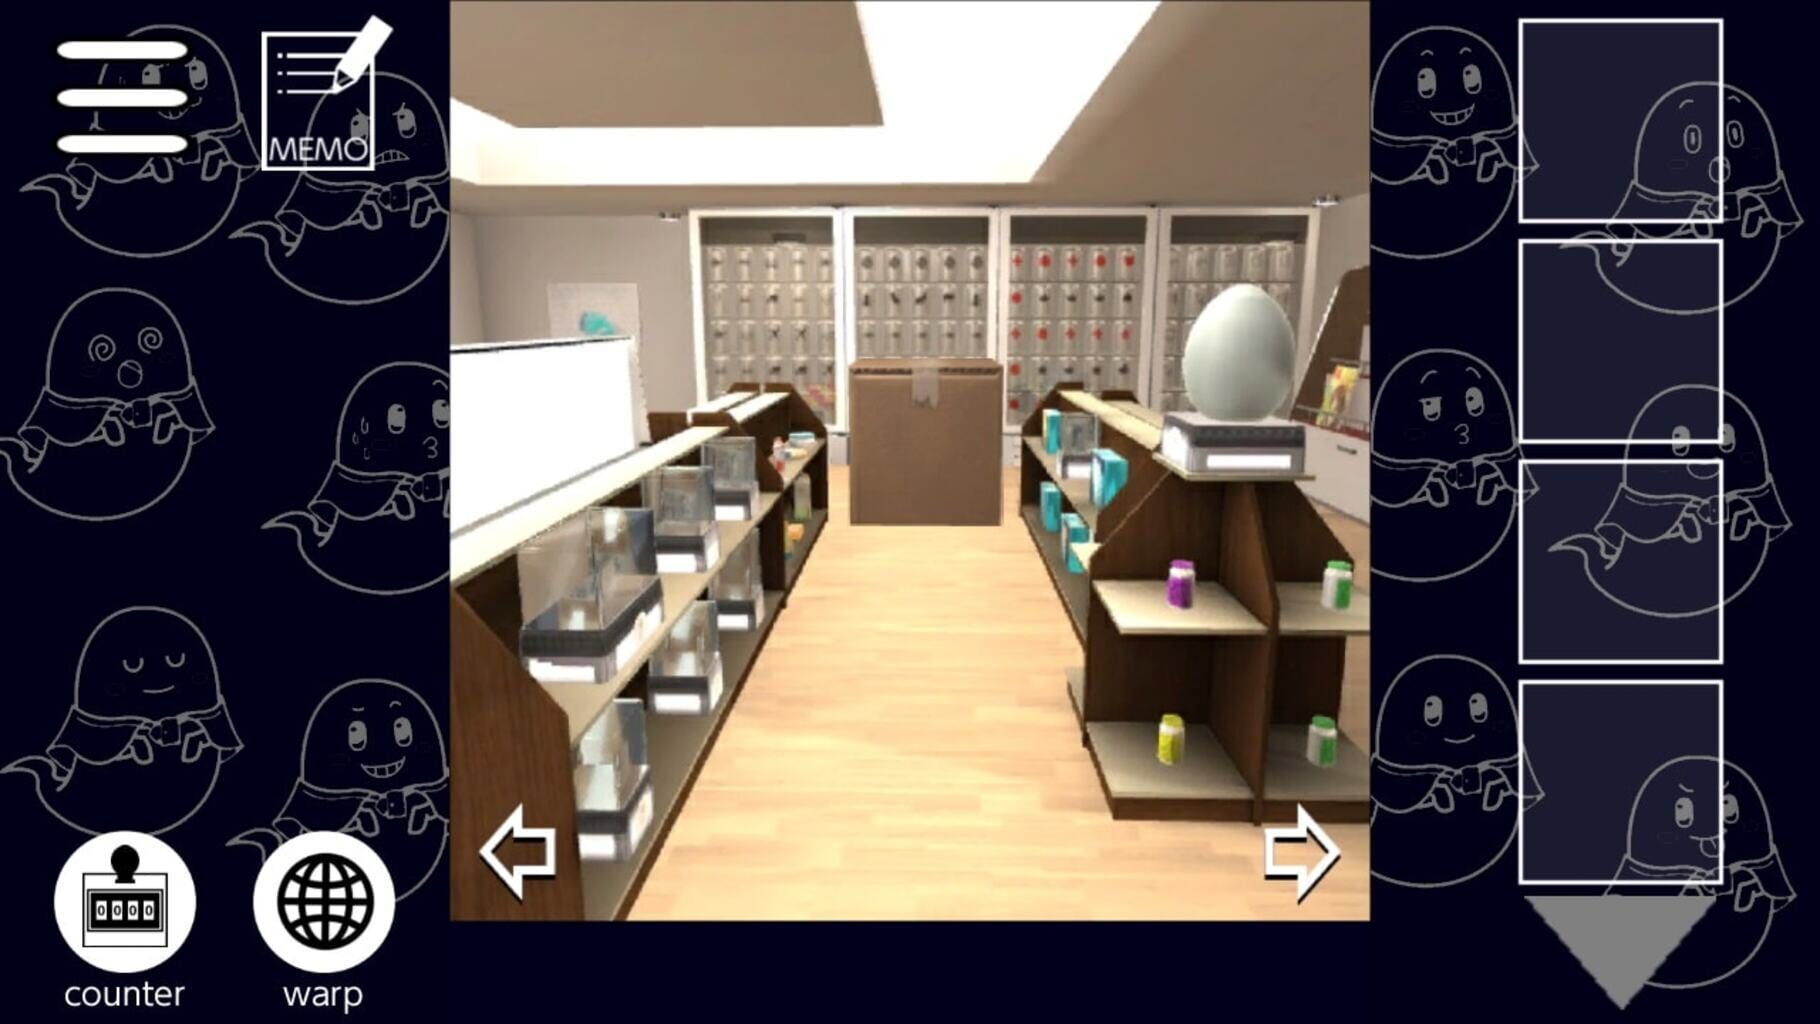 Cape's Escape Game 3rd Room screenshot